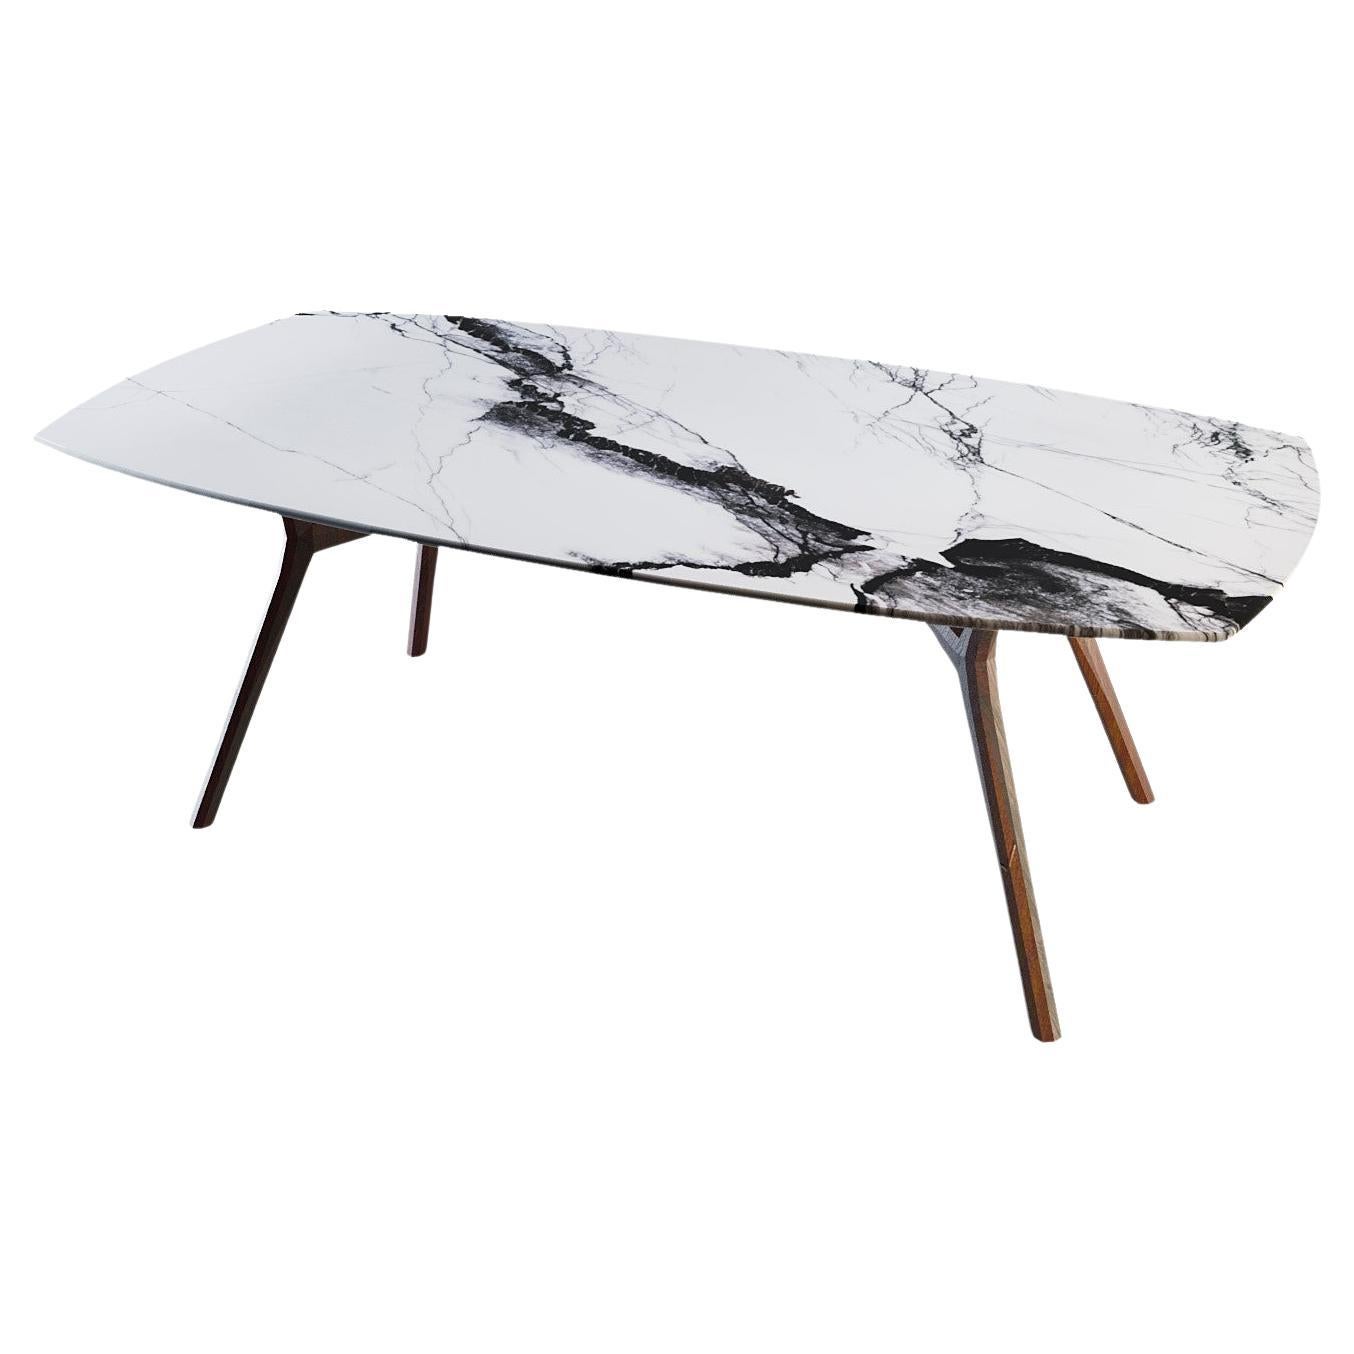 NORDST POUL Dining Table, Italian White Montain Marble, Danish Modern Design